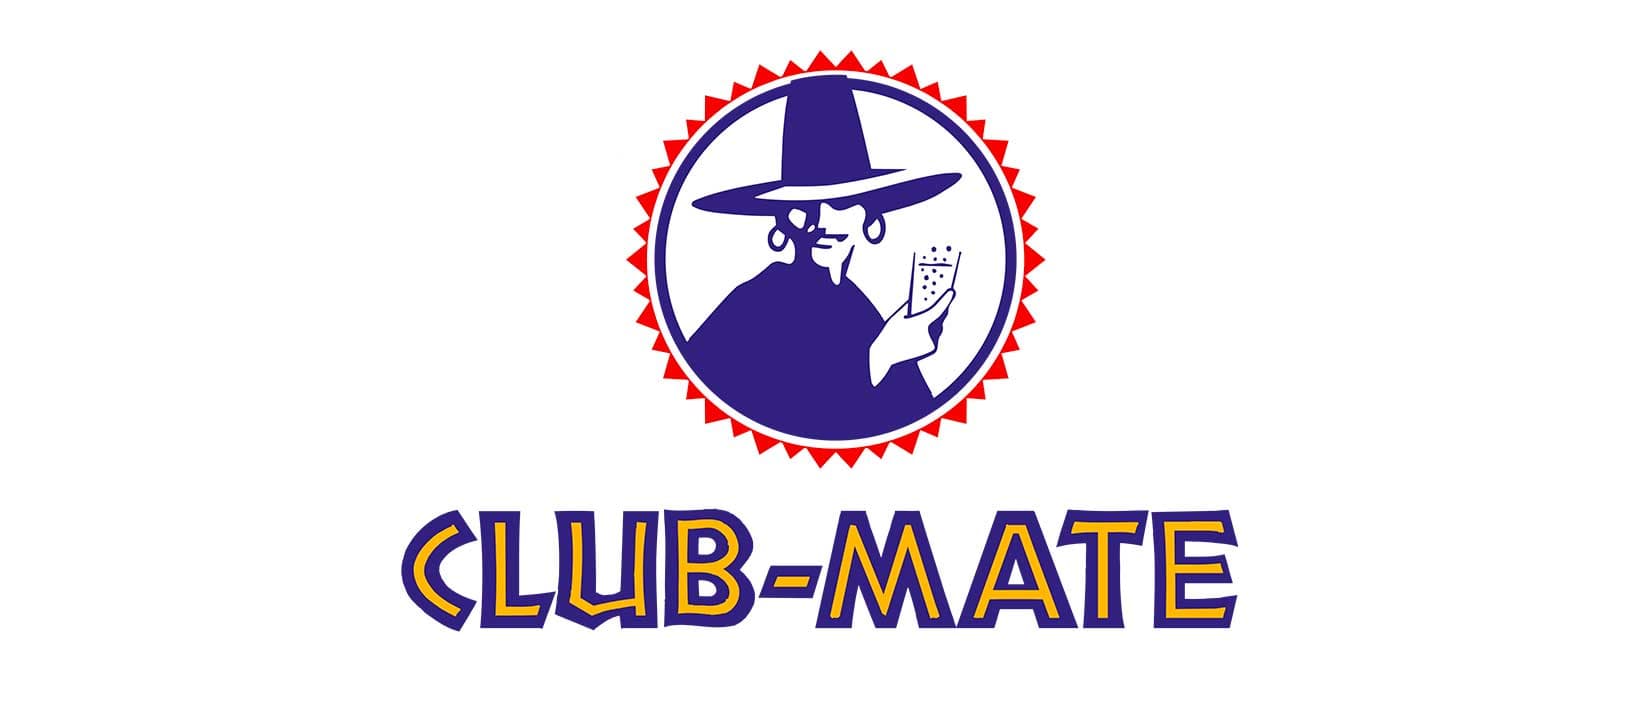 (c) Club-mate.fr